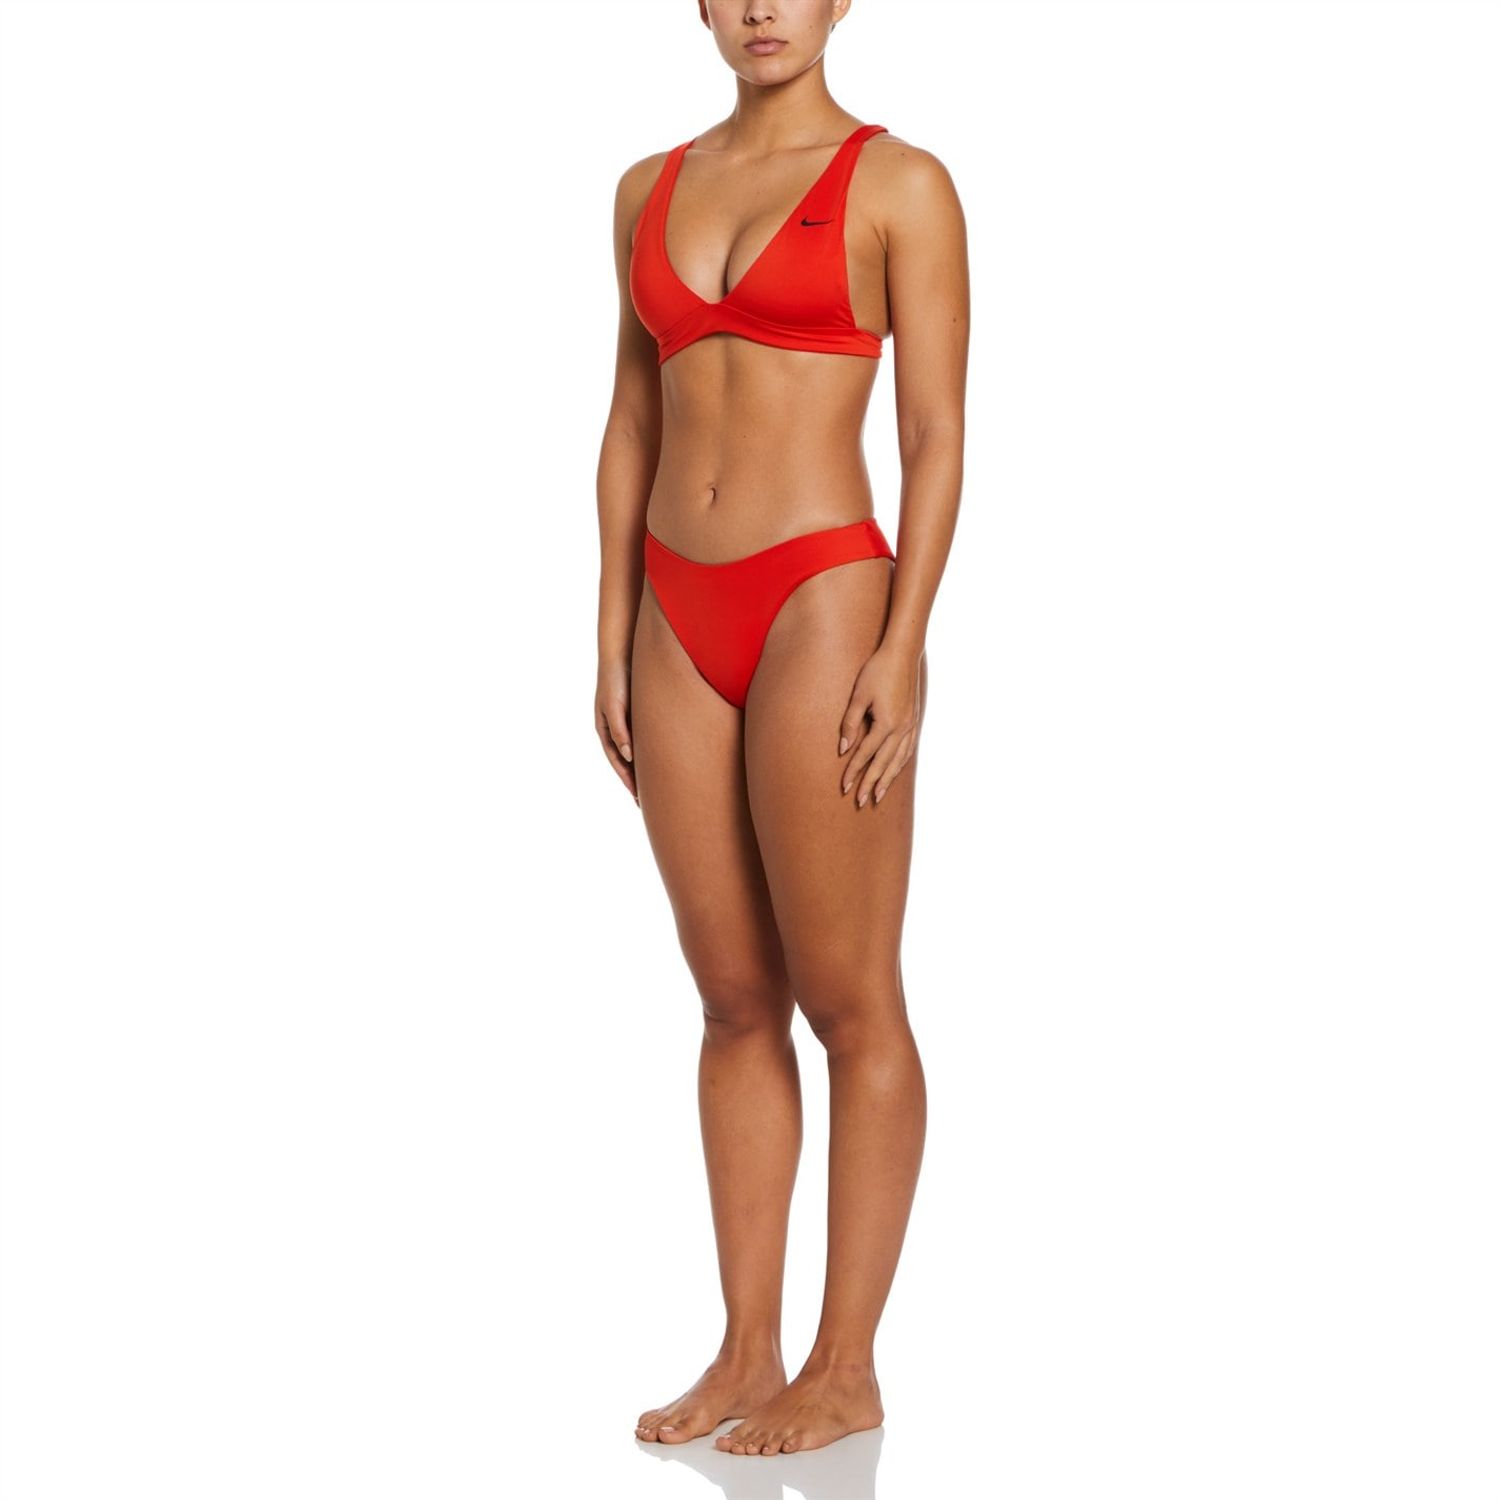 Red Nike Bralette Bikini Top - Get The Label